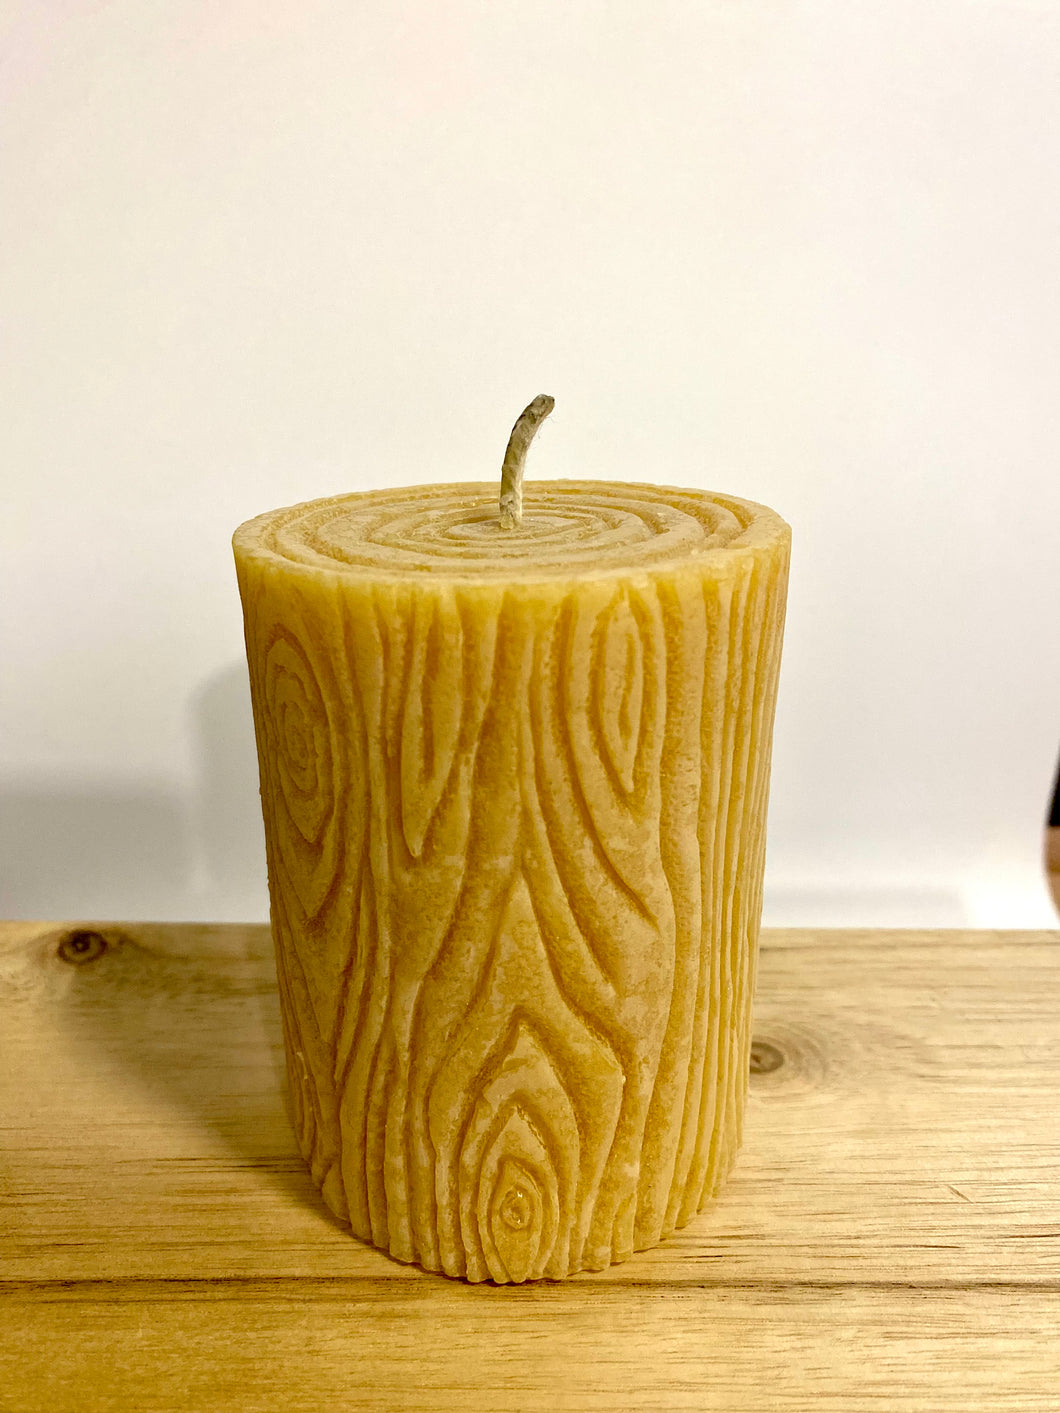 Wood grain beeswax candle